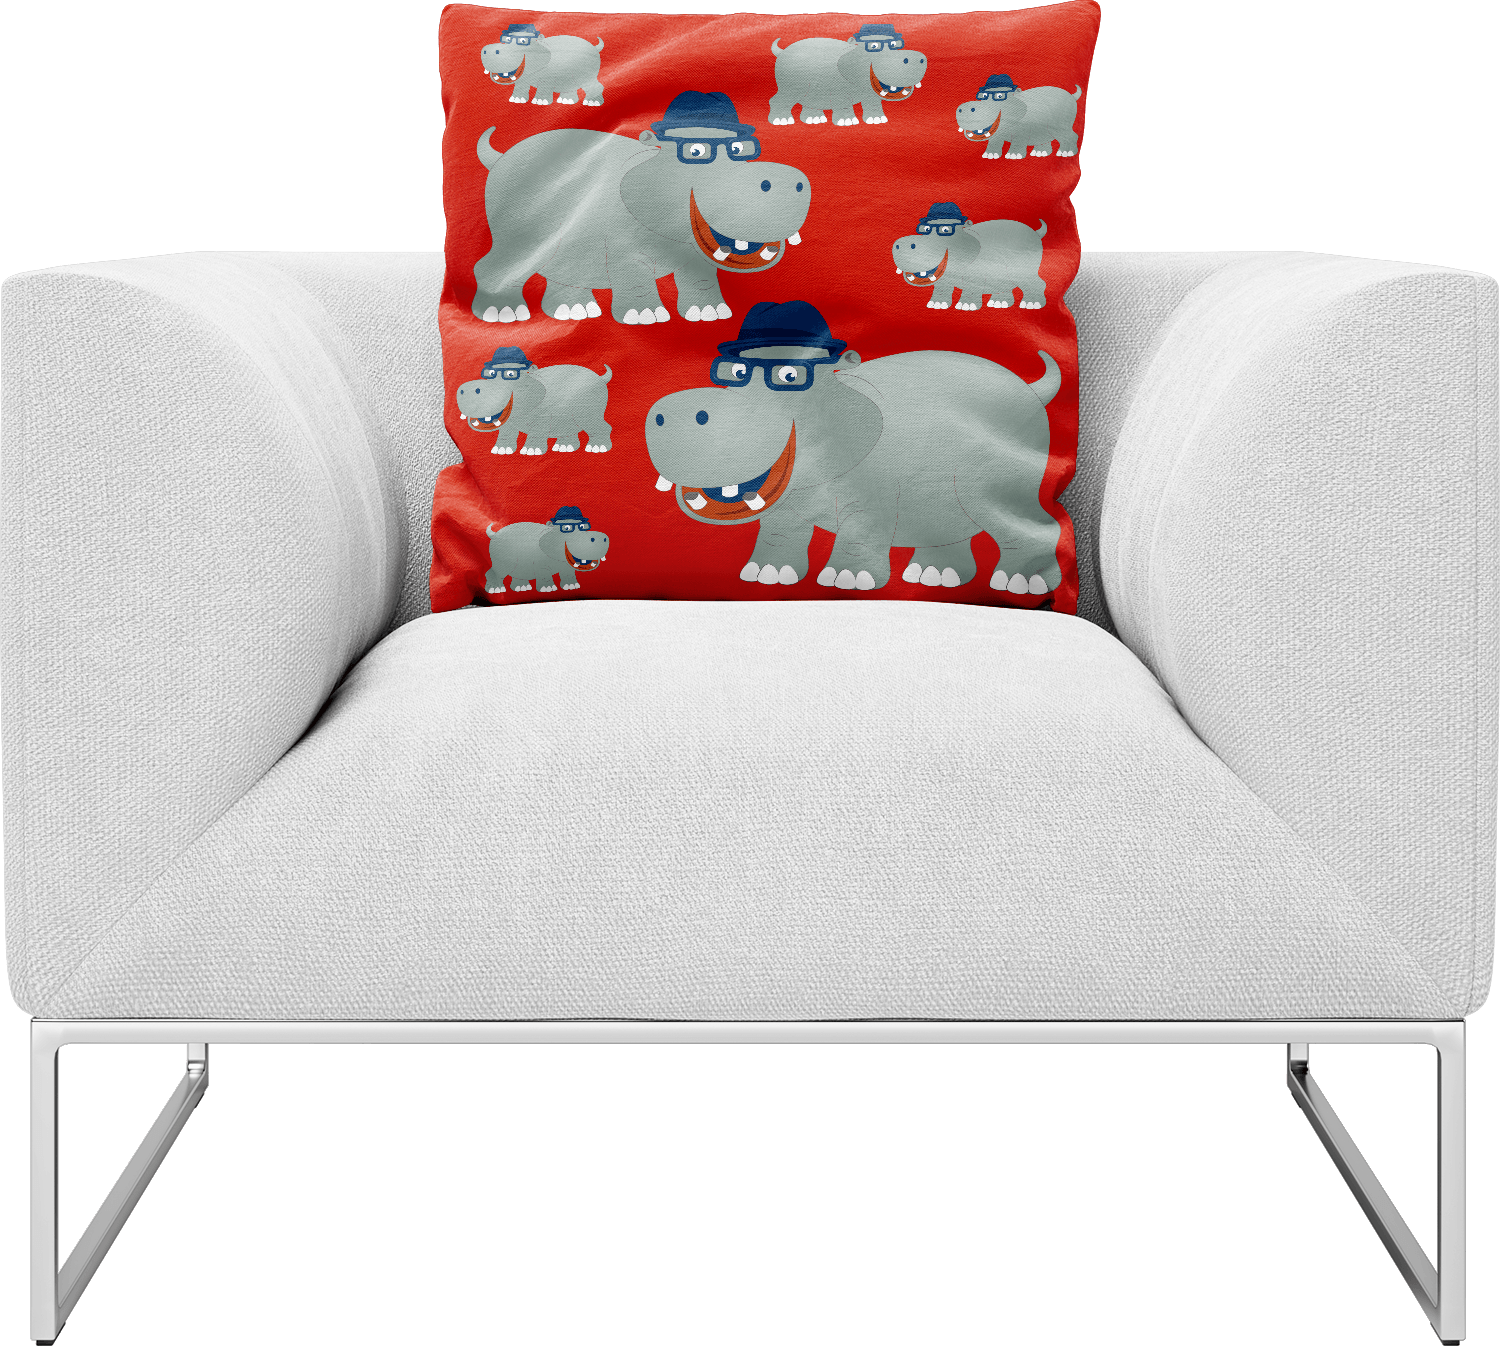 Hungry Hippo Pillows Cushions - fungear.com.au